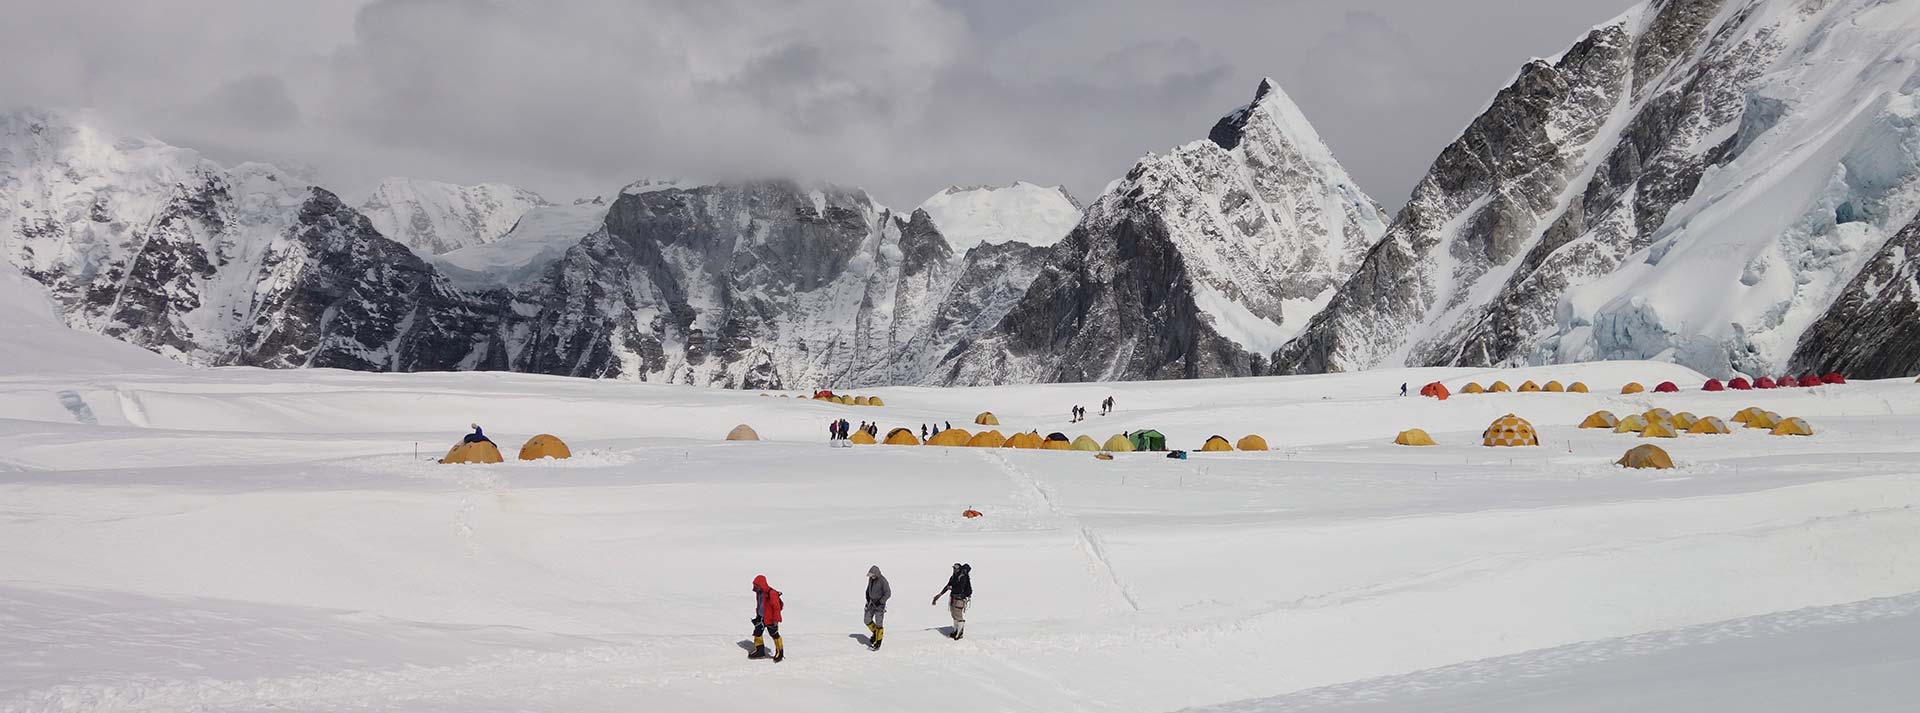 mountaineering-nepal